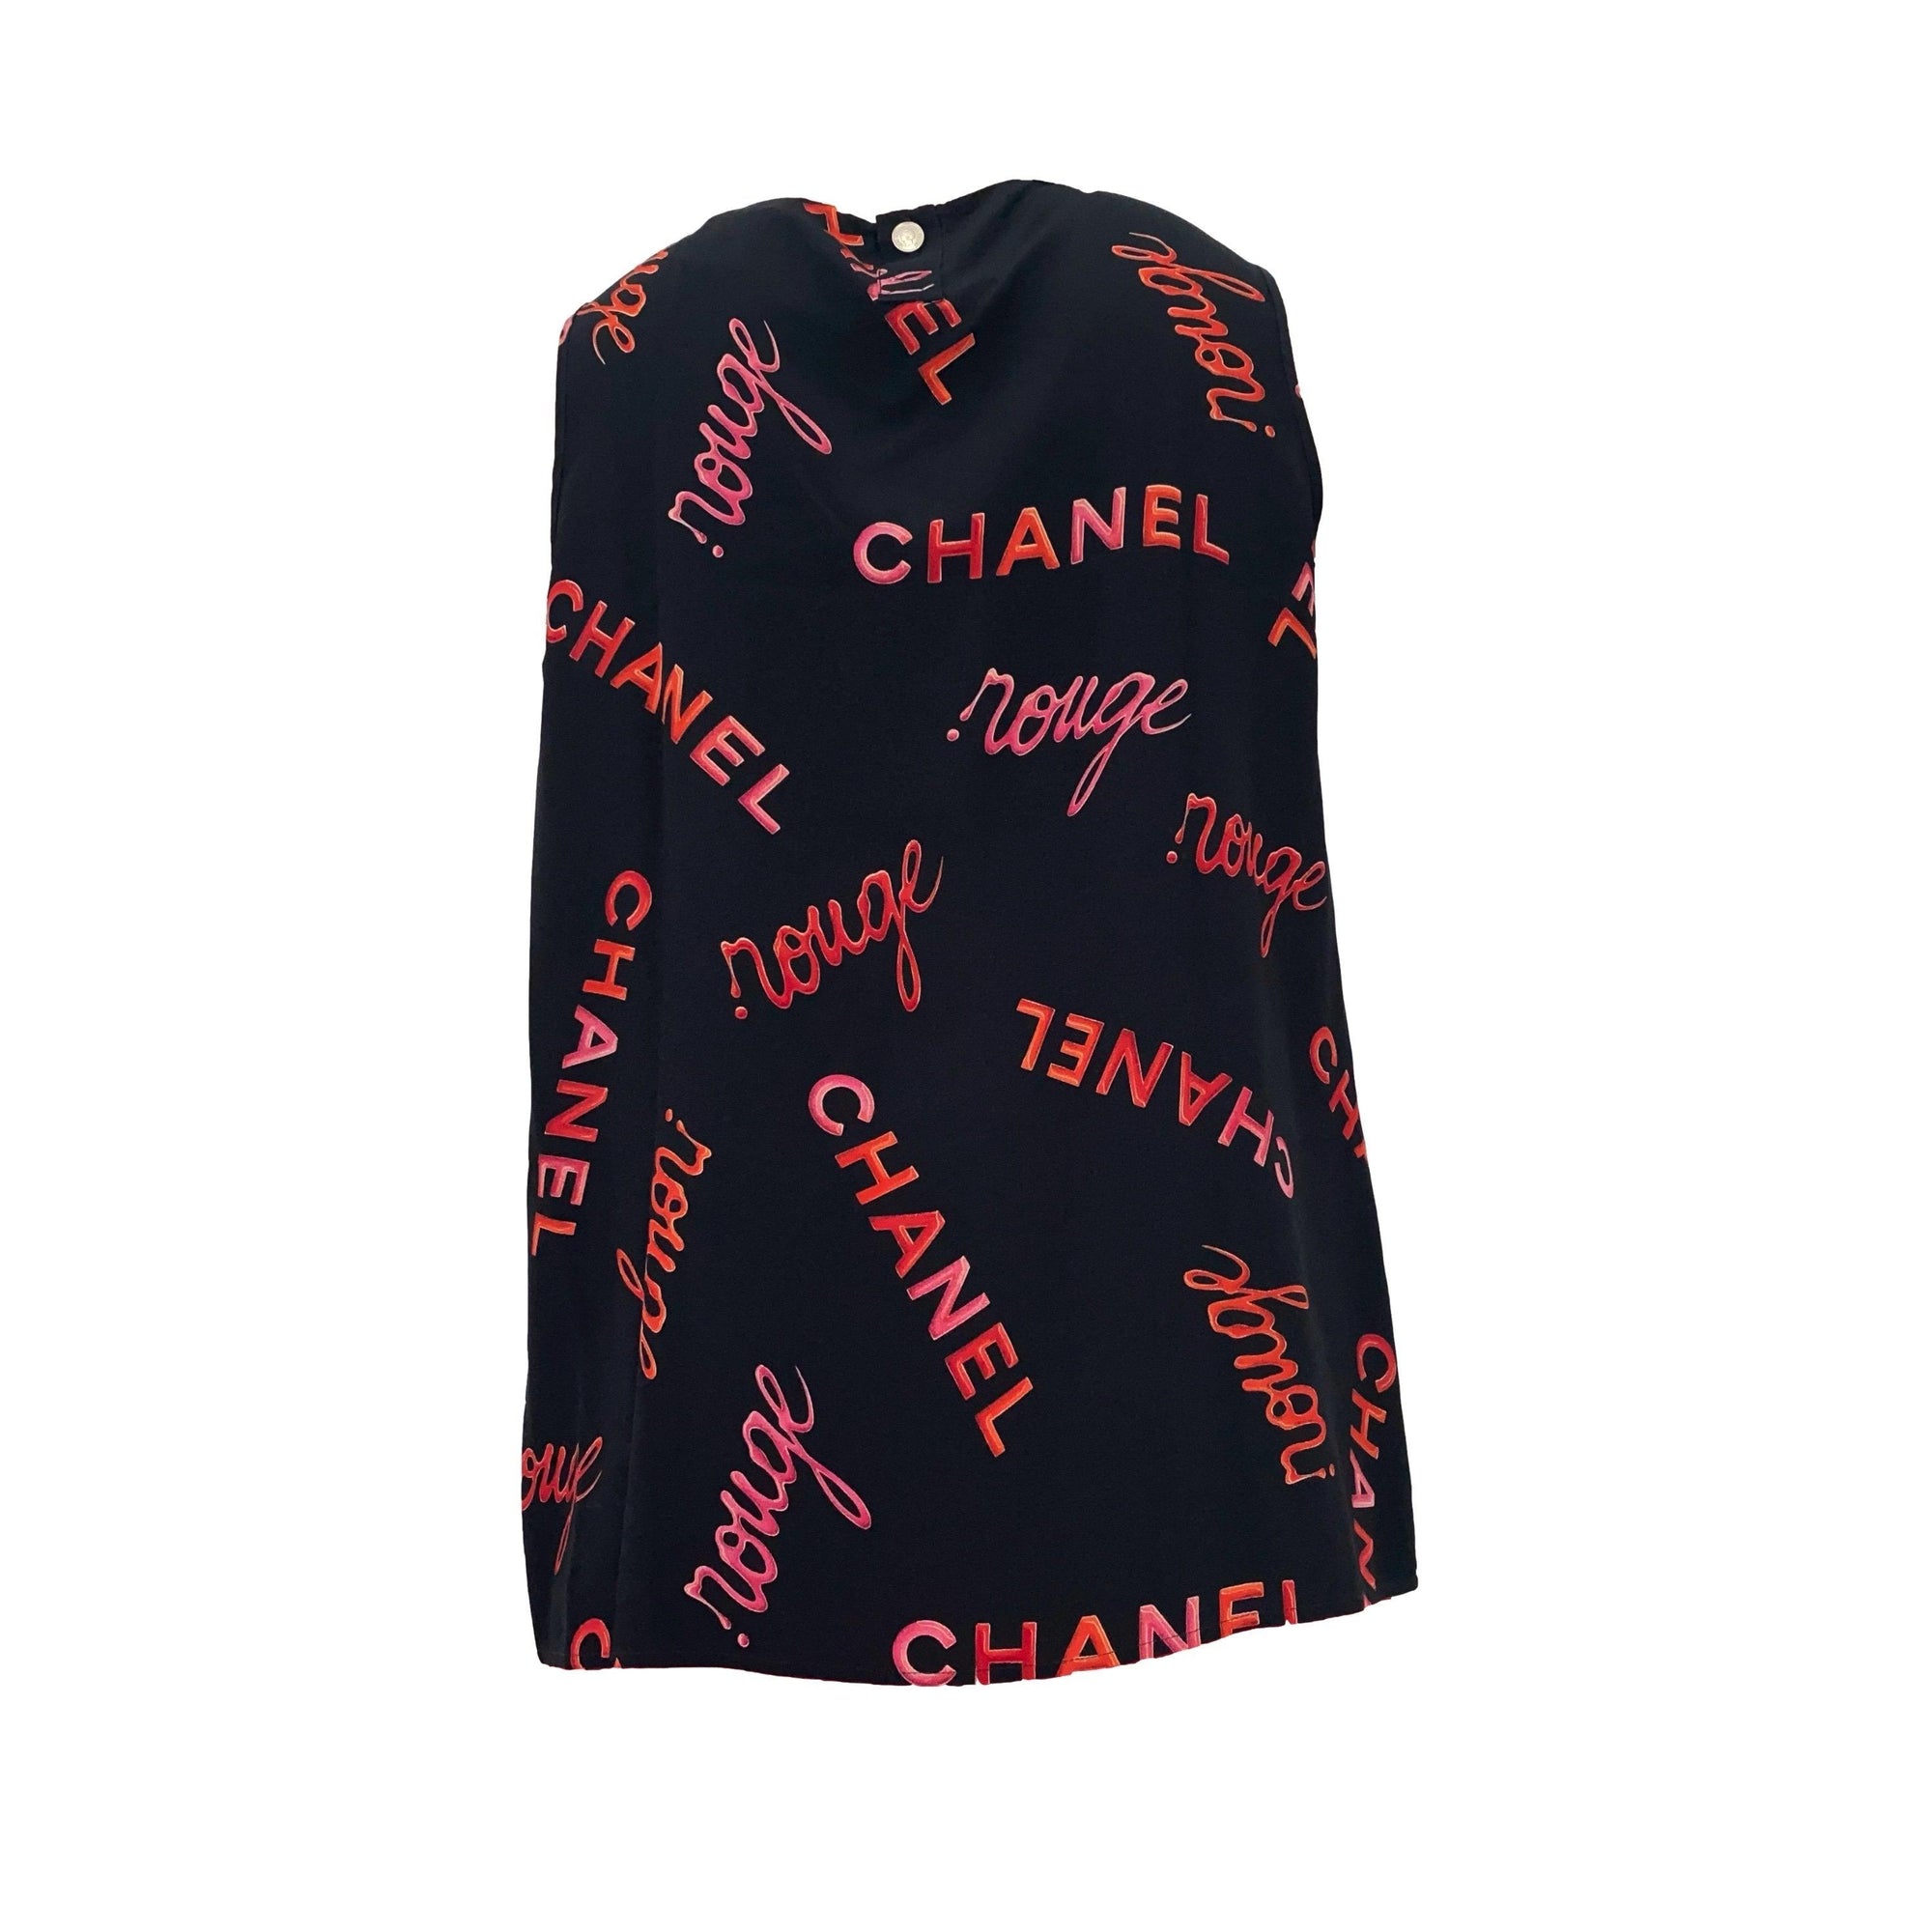 Chanel Black Rouge Tank - Apparel